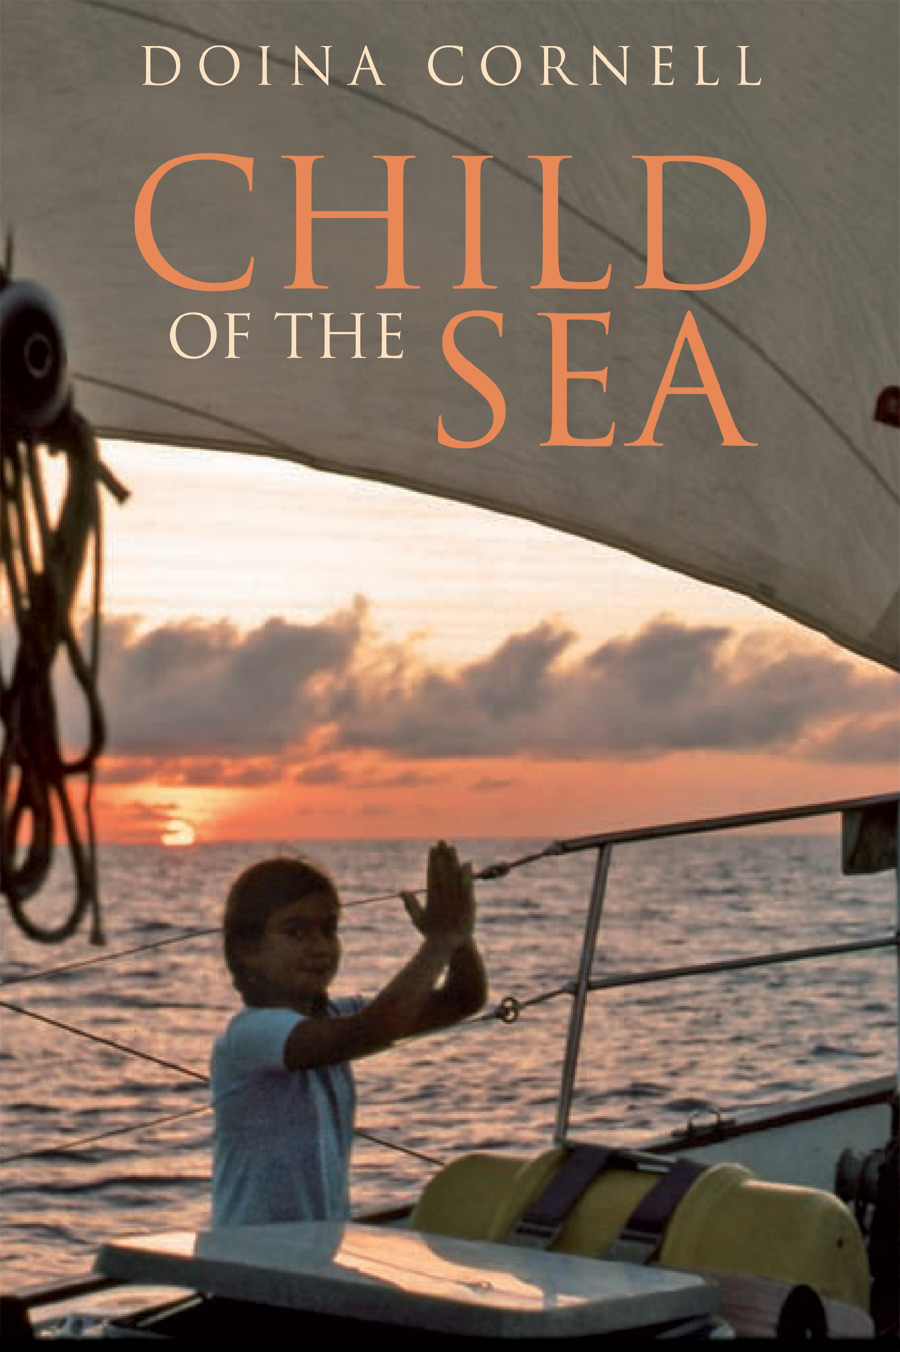 Jimmy Cornell Books, Child of the Sea